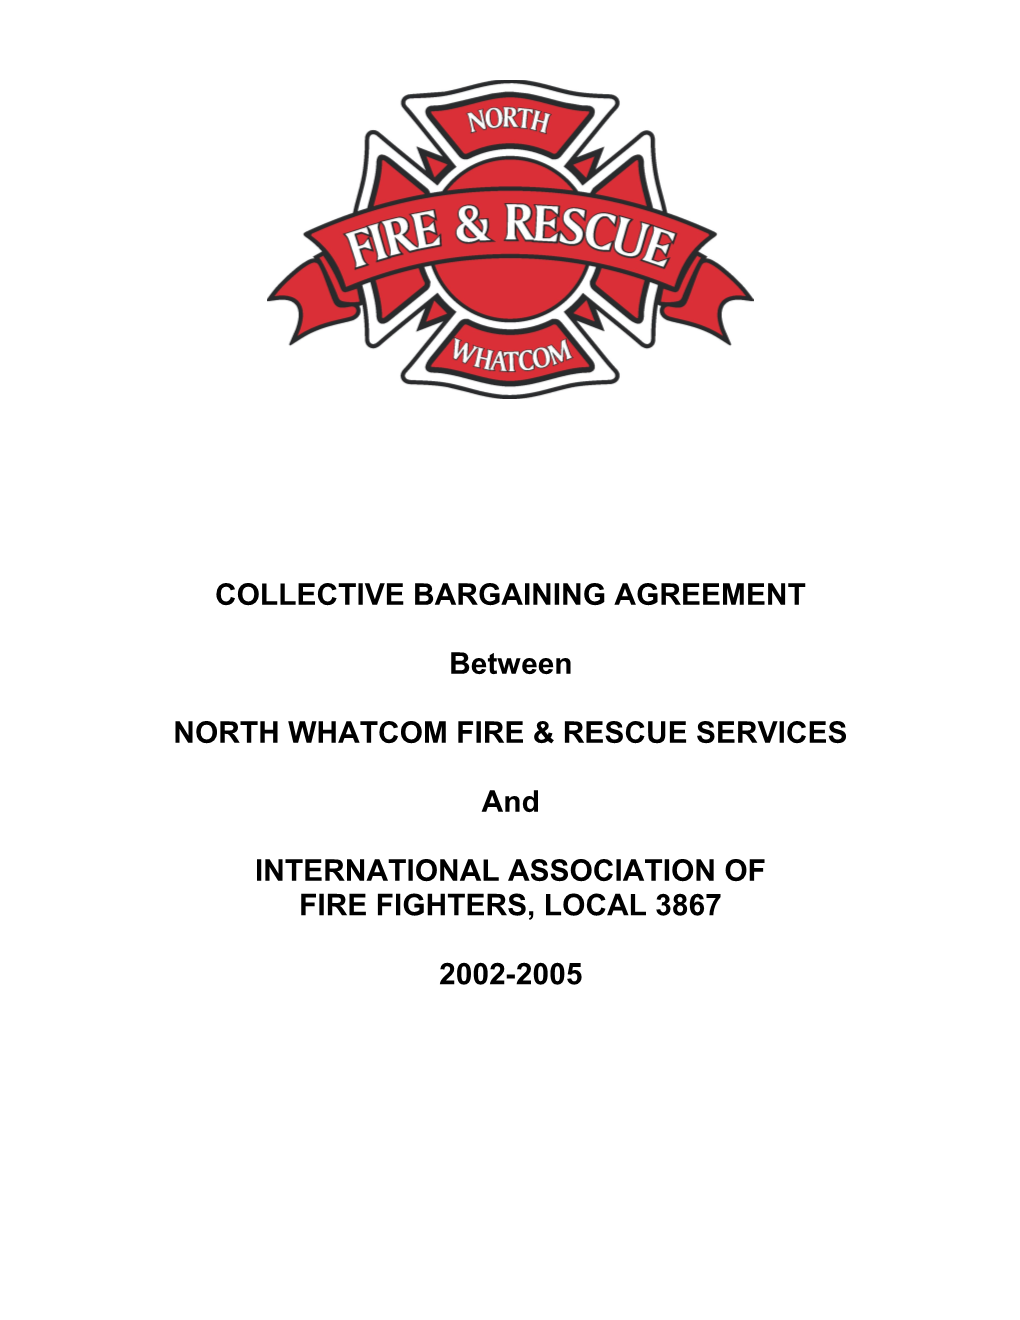 North Whatcom Fire & Rescue Services